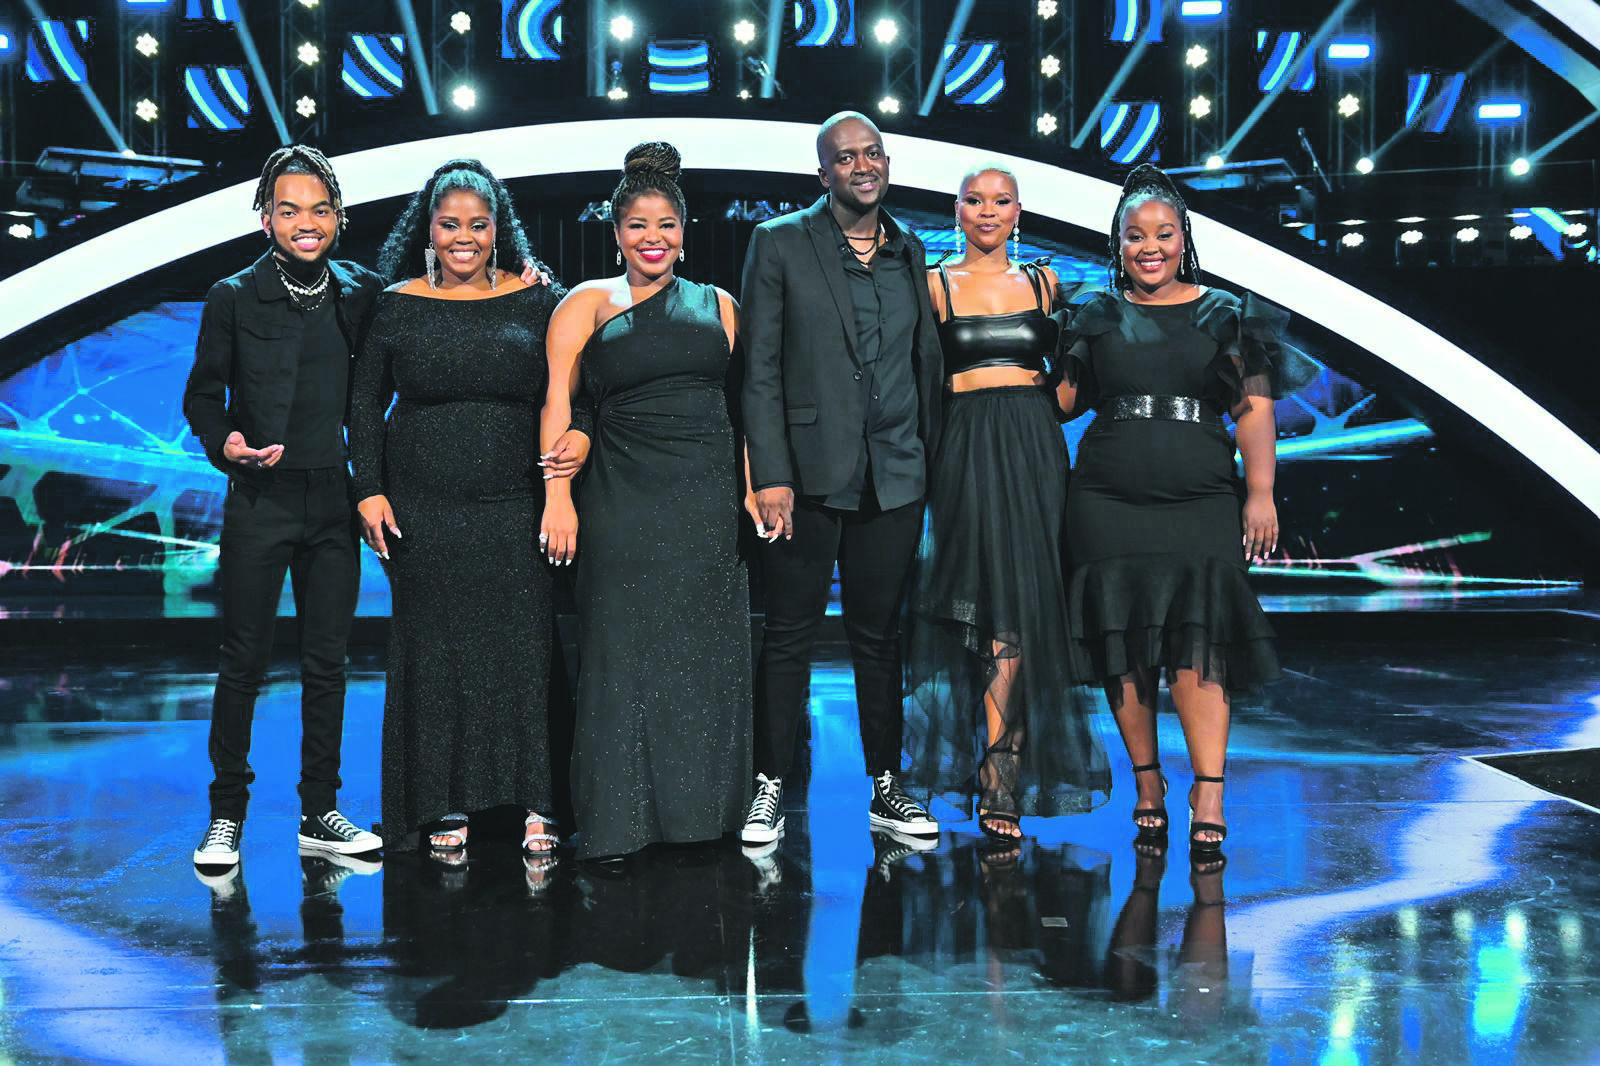 Idols SA’s top six contestants sang gospel songs alongside Mzansi’s award-winning gospel group, Joyous Celebration, on Sunday night.